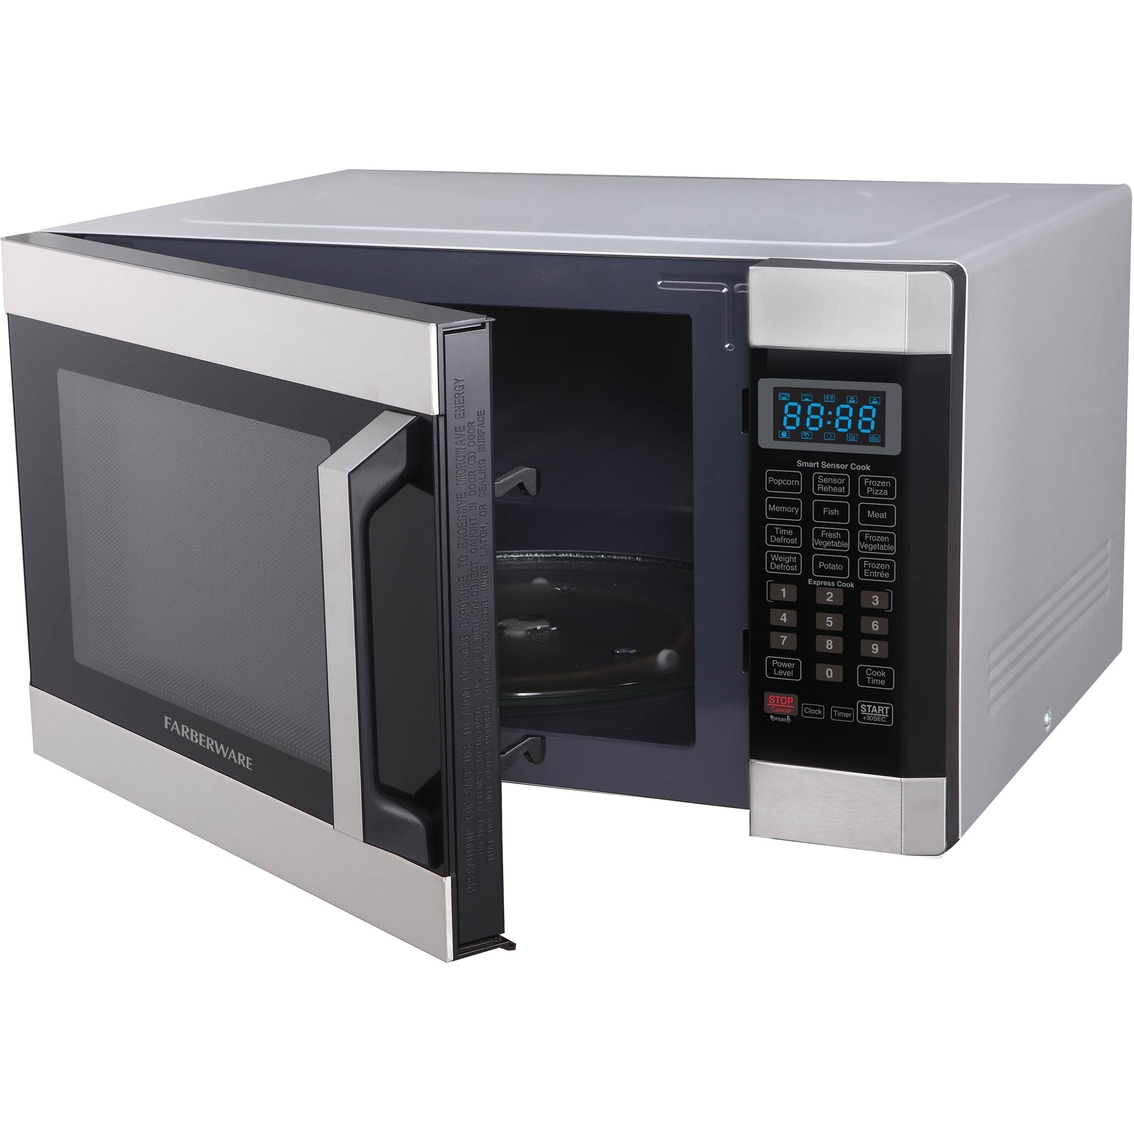 Farberware 1.6 cu. ft. Smart Sensor Microwave Oven - Image 3 of 7